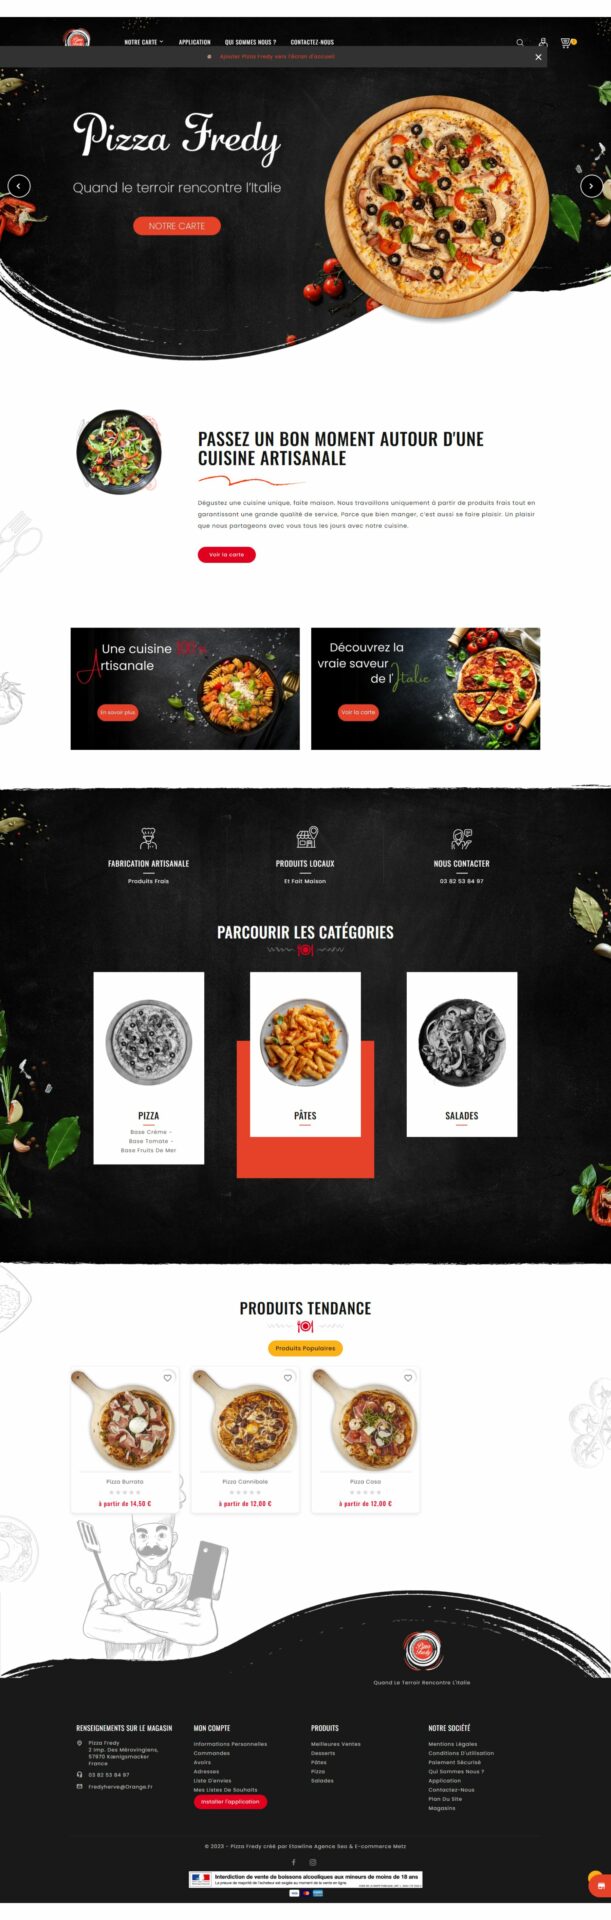 Nouveau site refonte pizza fredy- Etowline